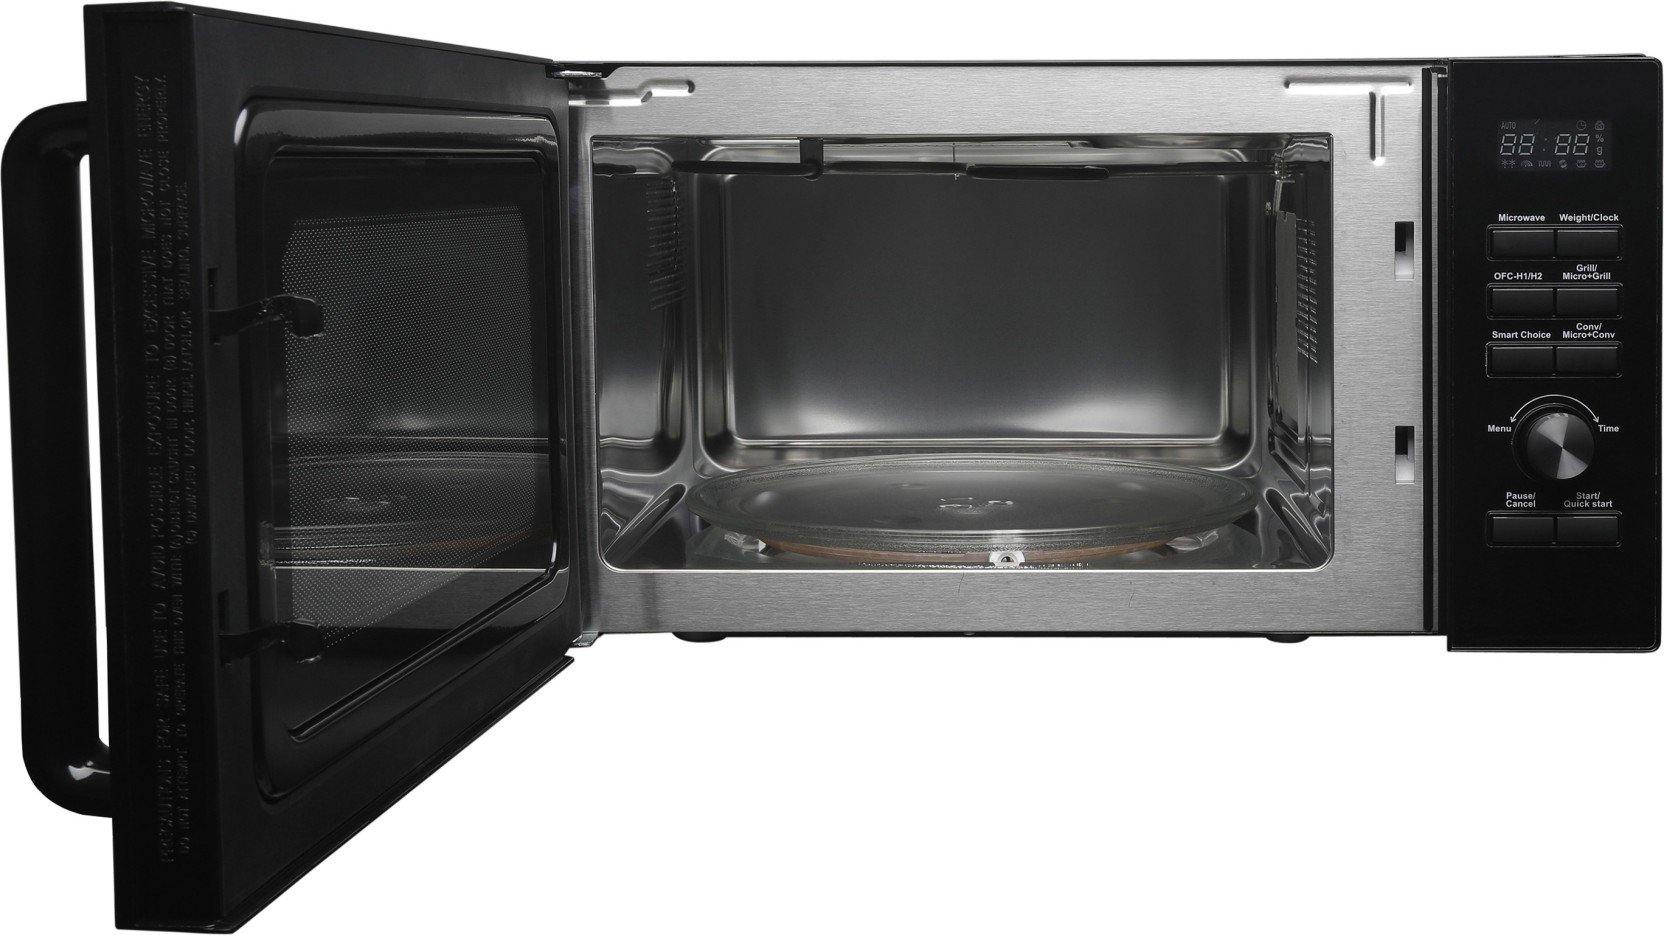 IFB 30 L Convection Microwave Oven (30BC5, Black) - Mahajan Electronics Online